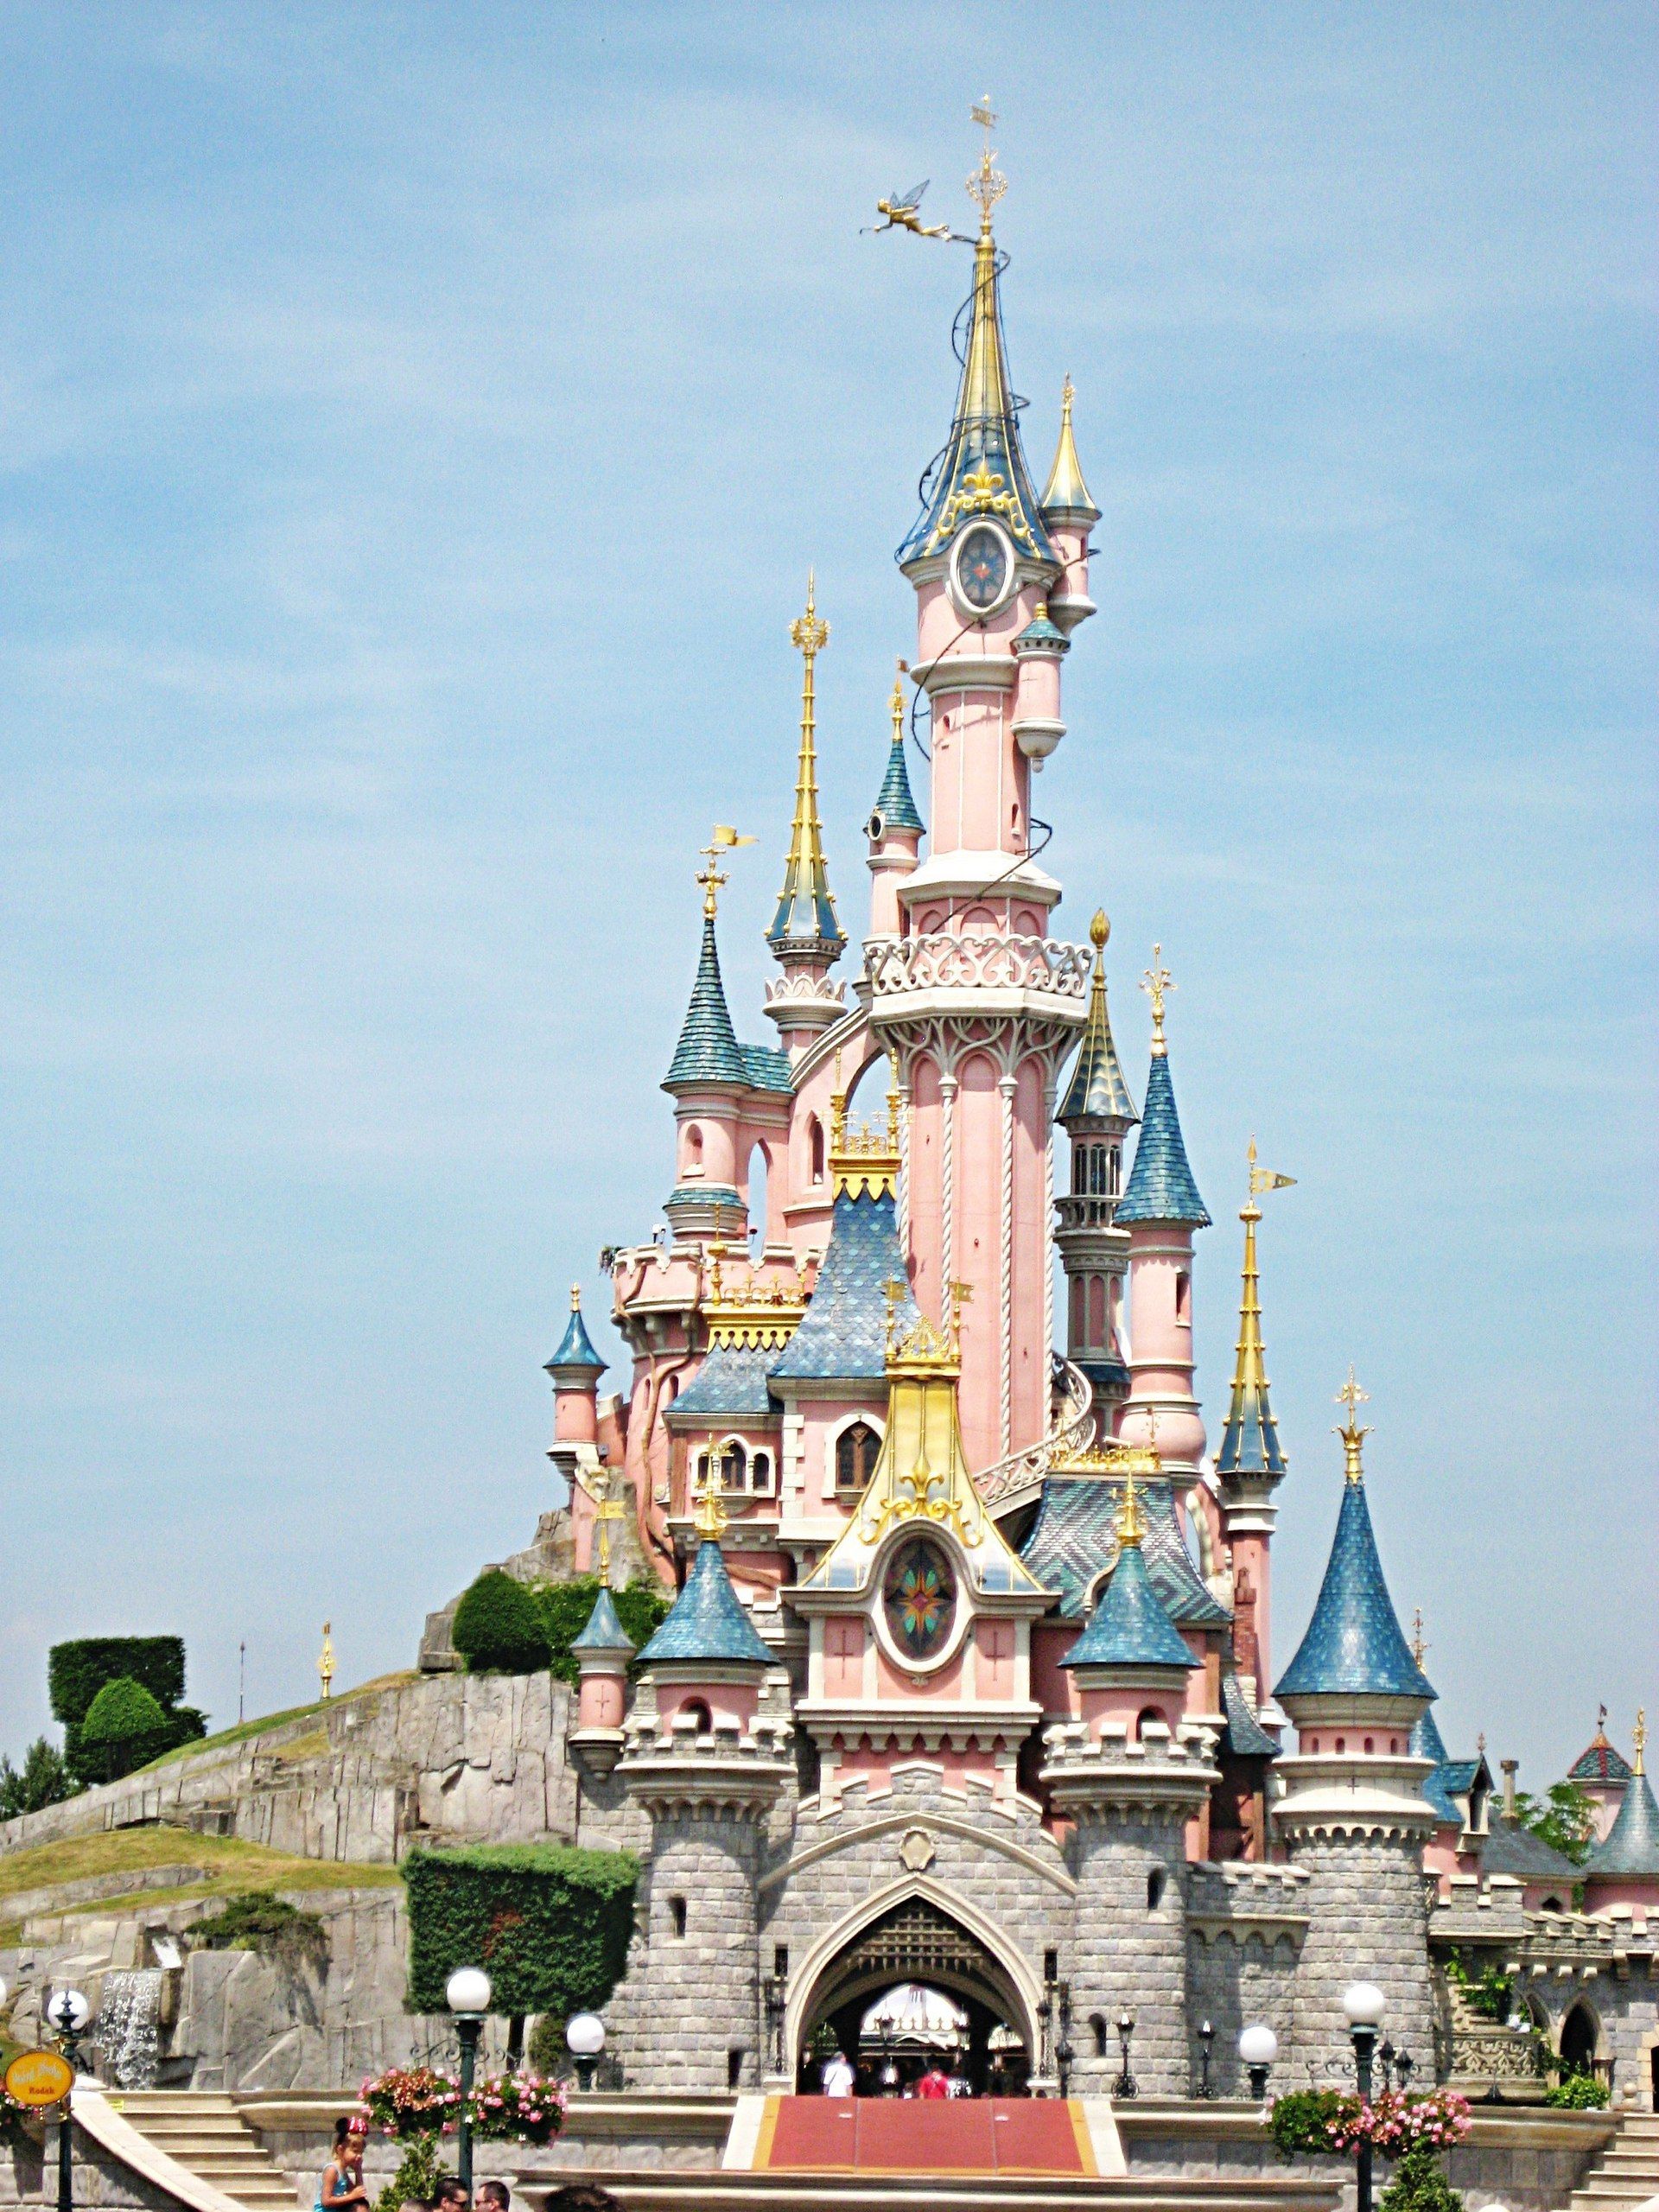 Free download Disney Princess image The Sleeping Beauty Castle